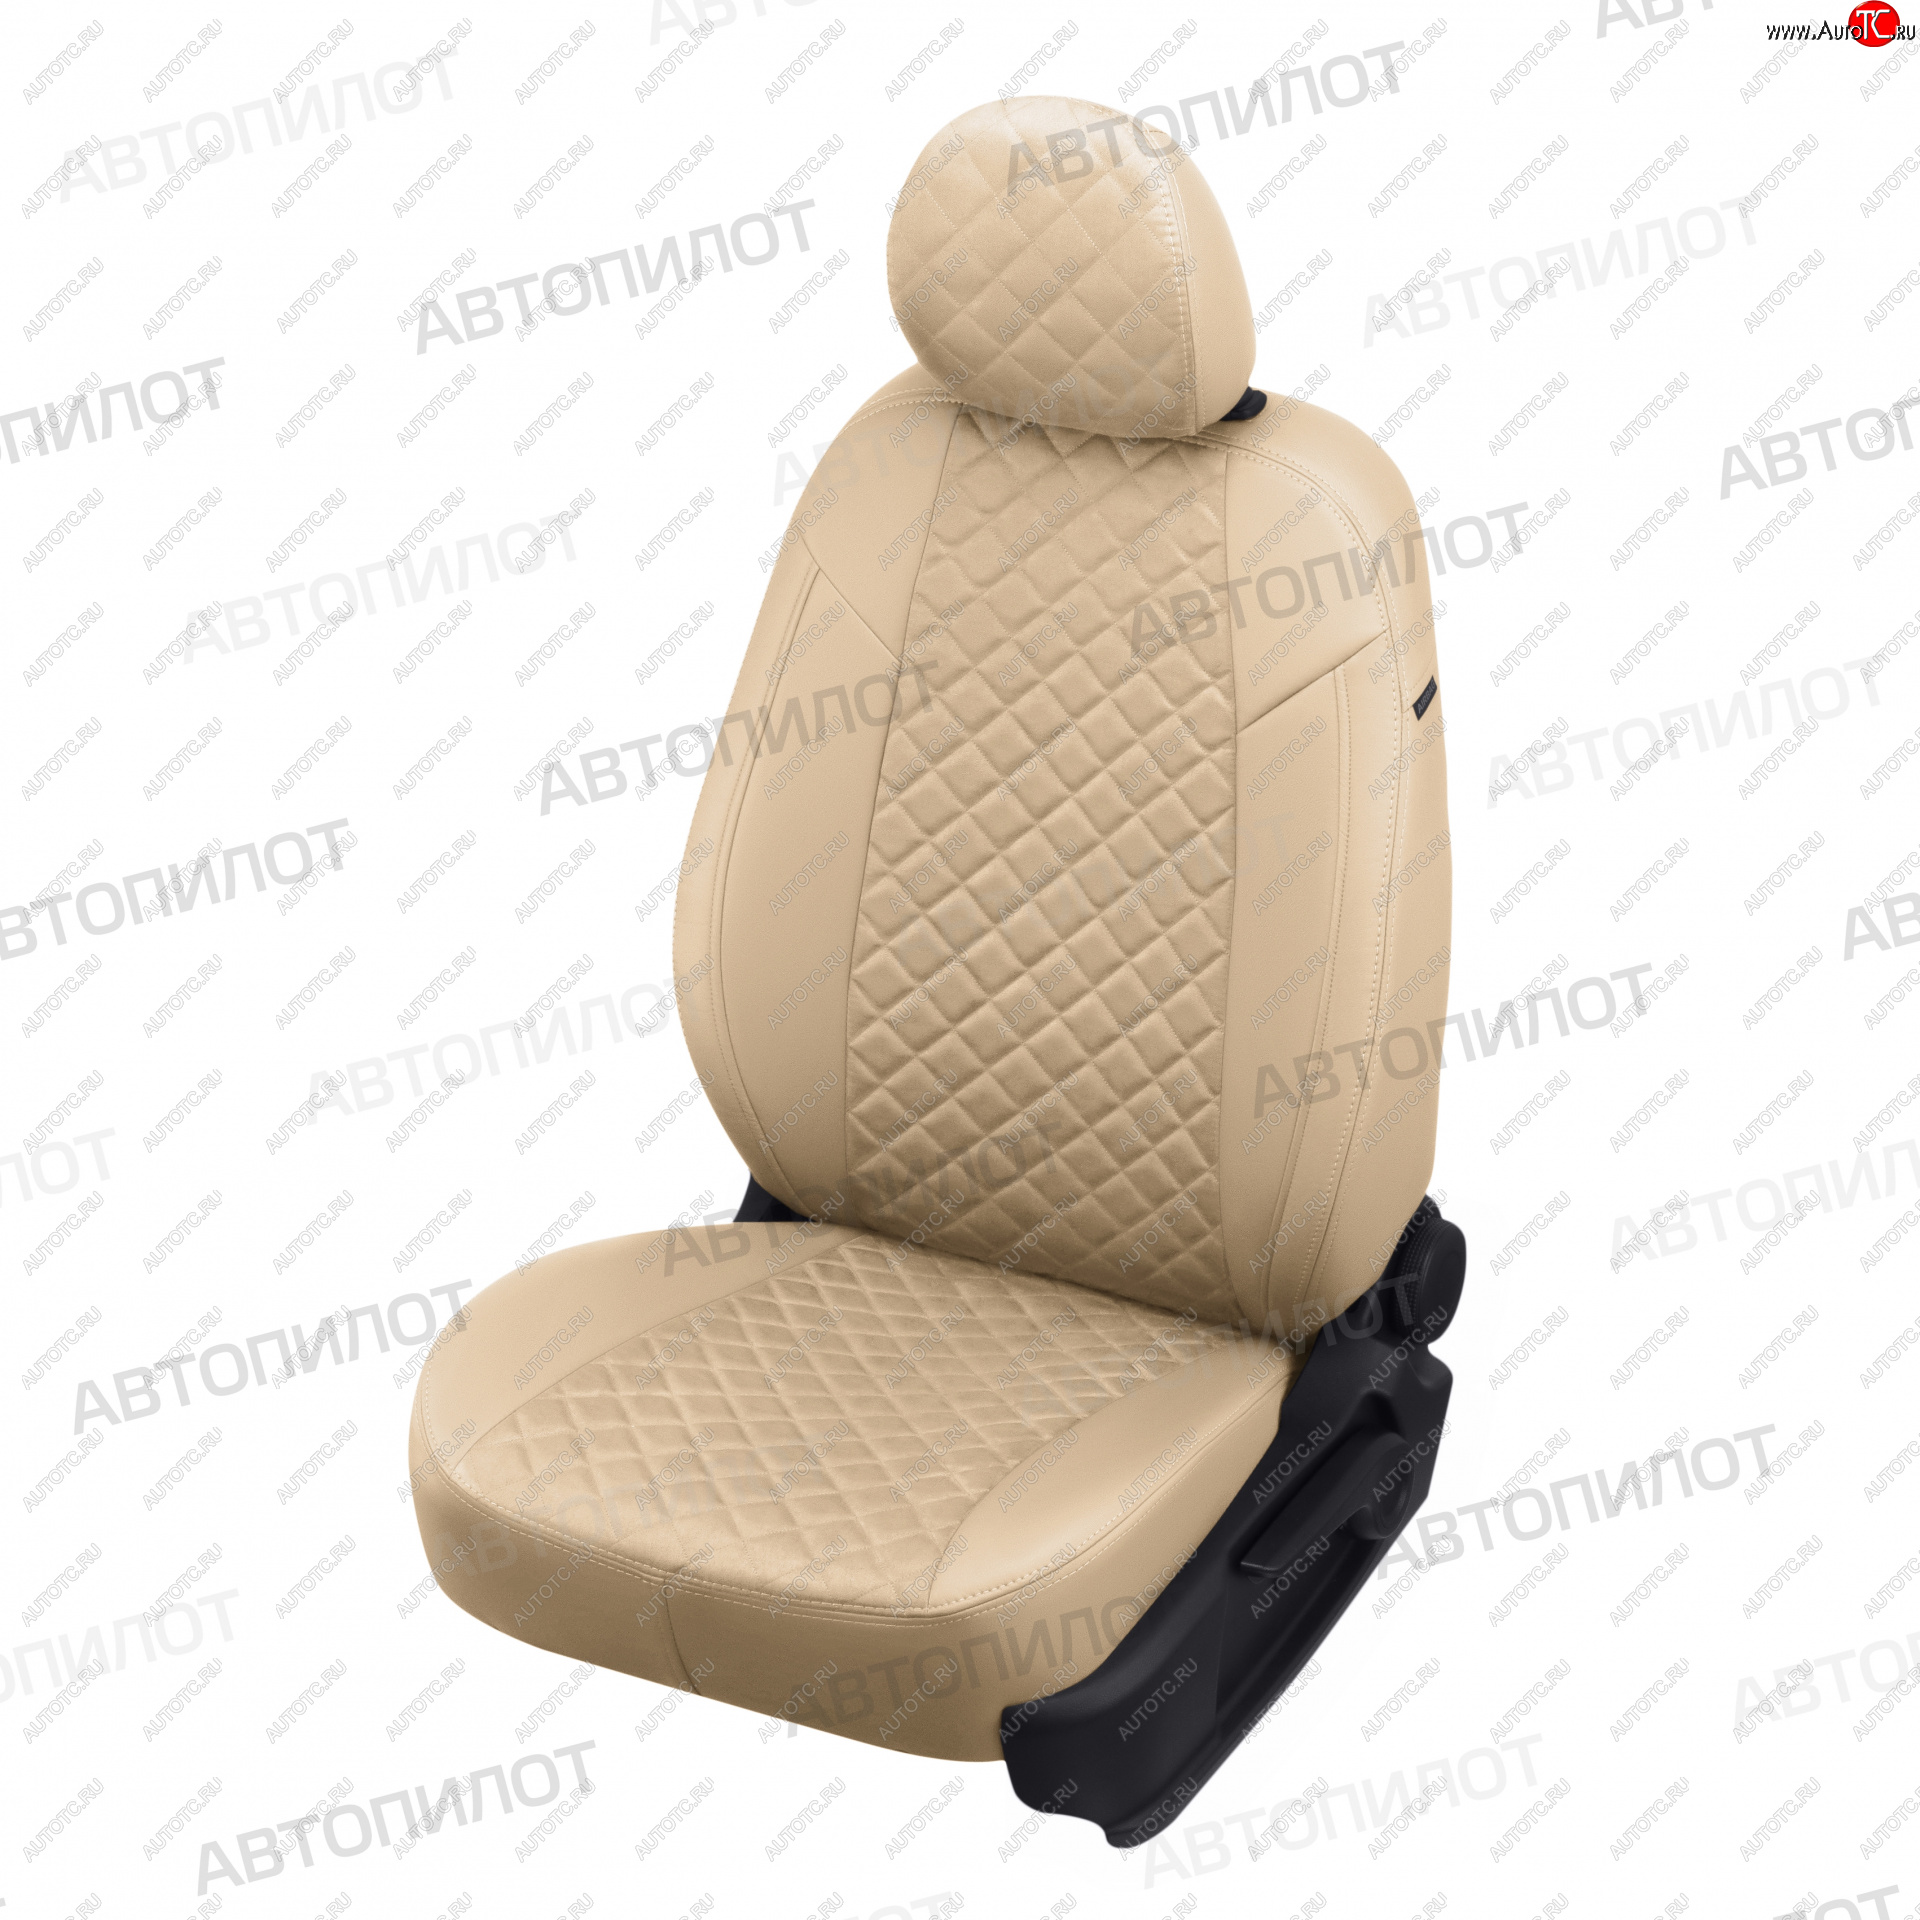 14 499 р. Чехлы сидений (Titanium, экокожа/алькантара) Автопилот Ромб  Ford Mondeo (2007-2014) (бежевый)